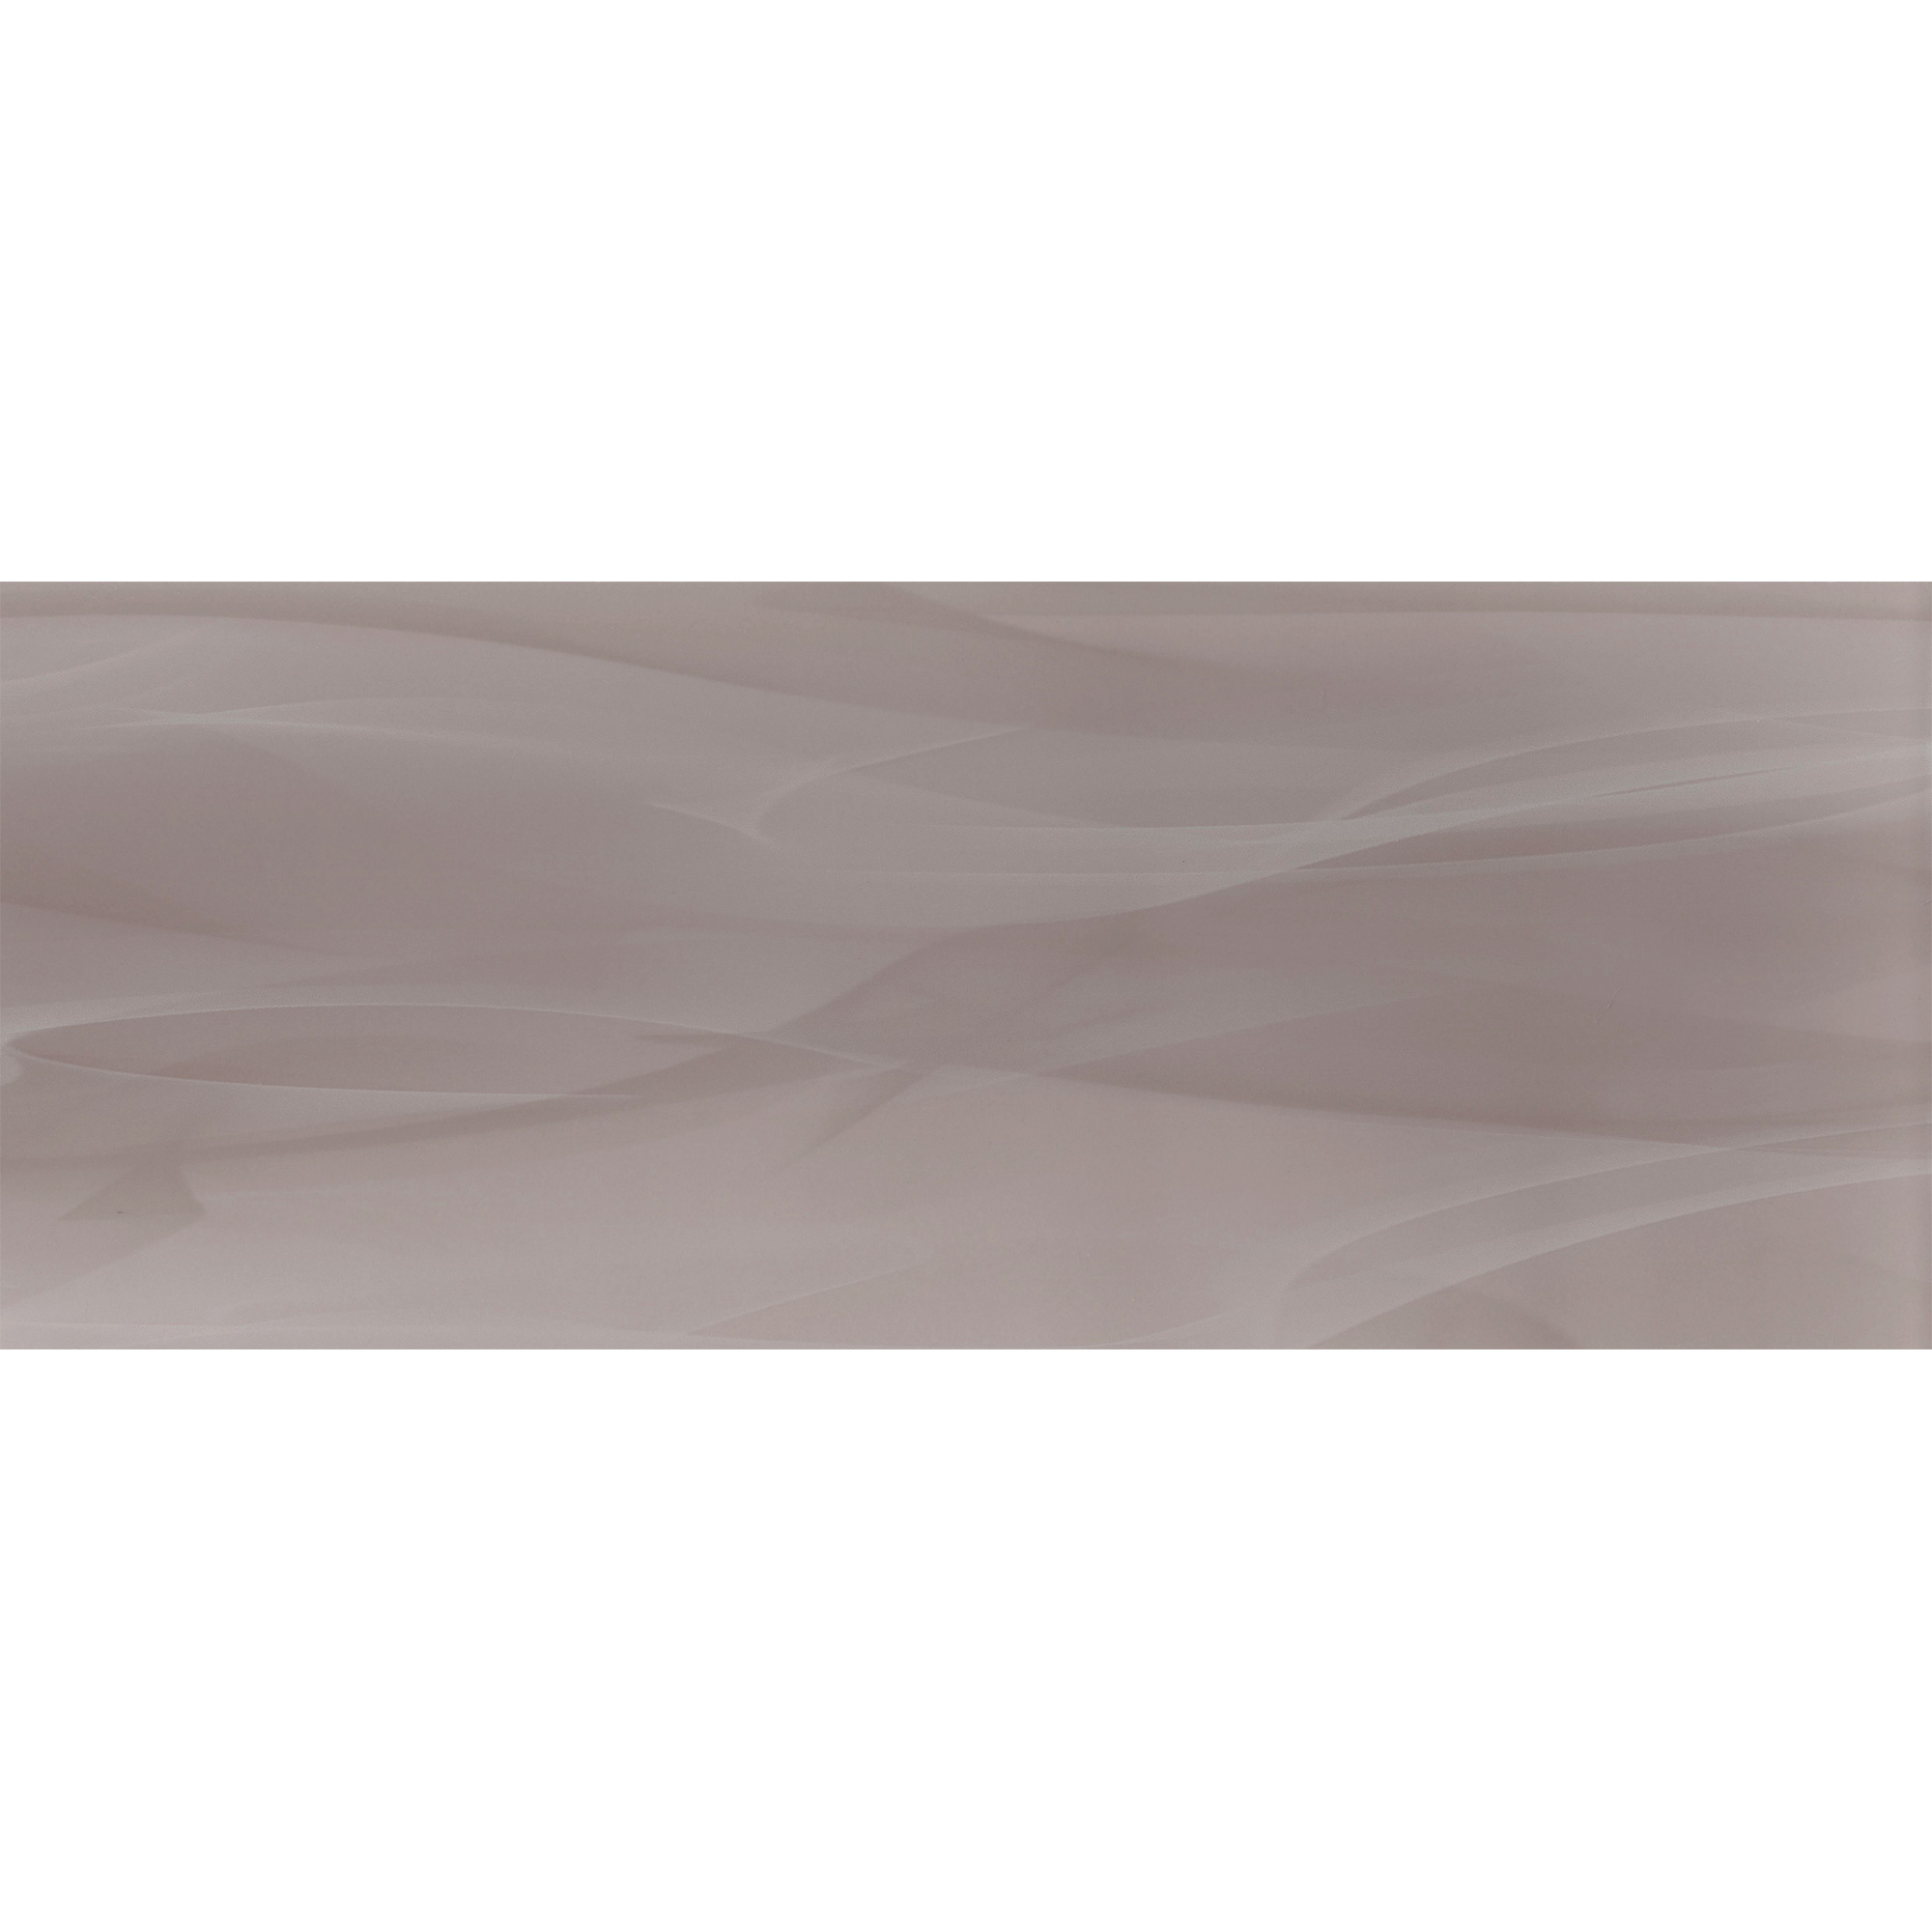 BORNEO Wandfliesen 20x50cm Weiß-Grau